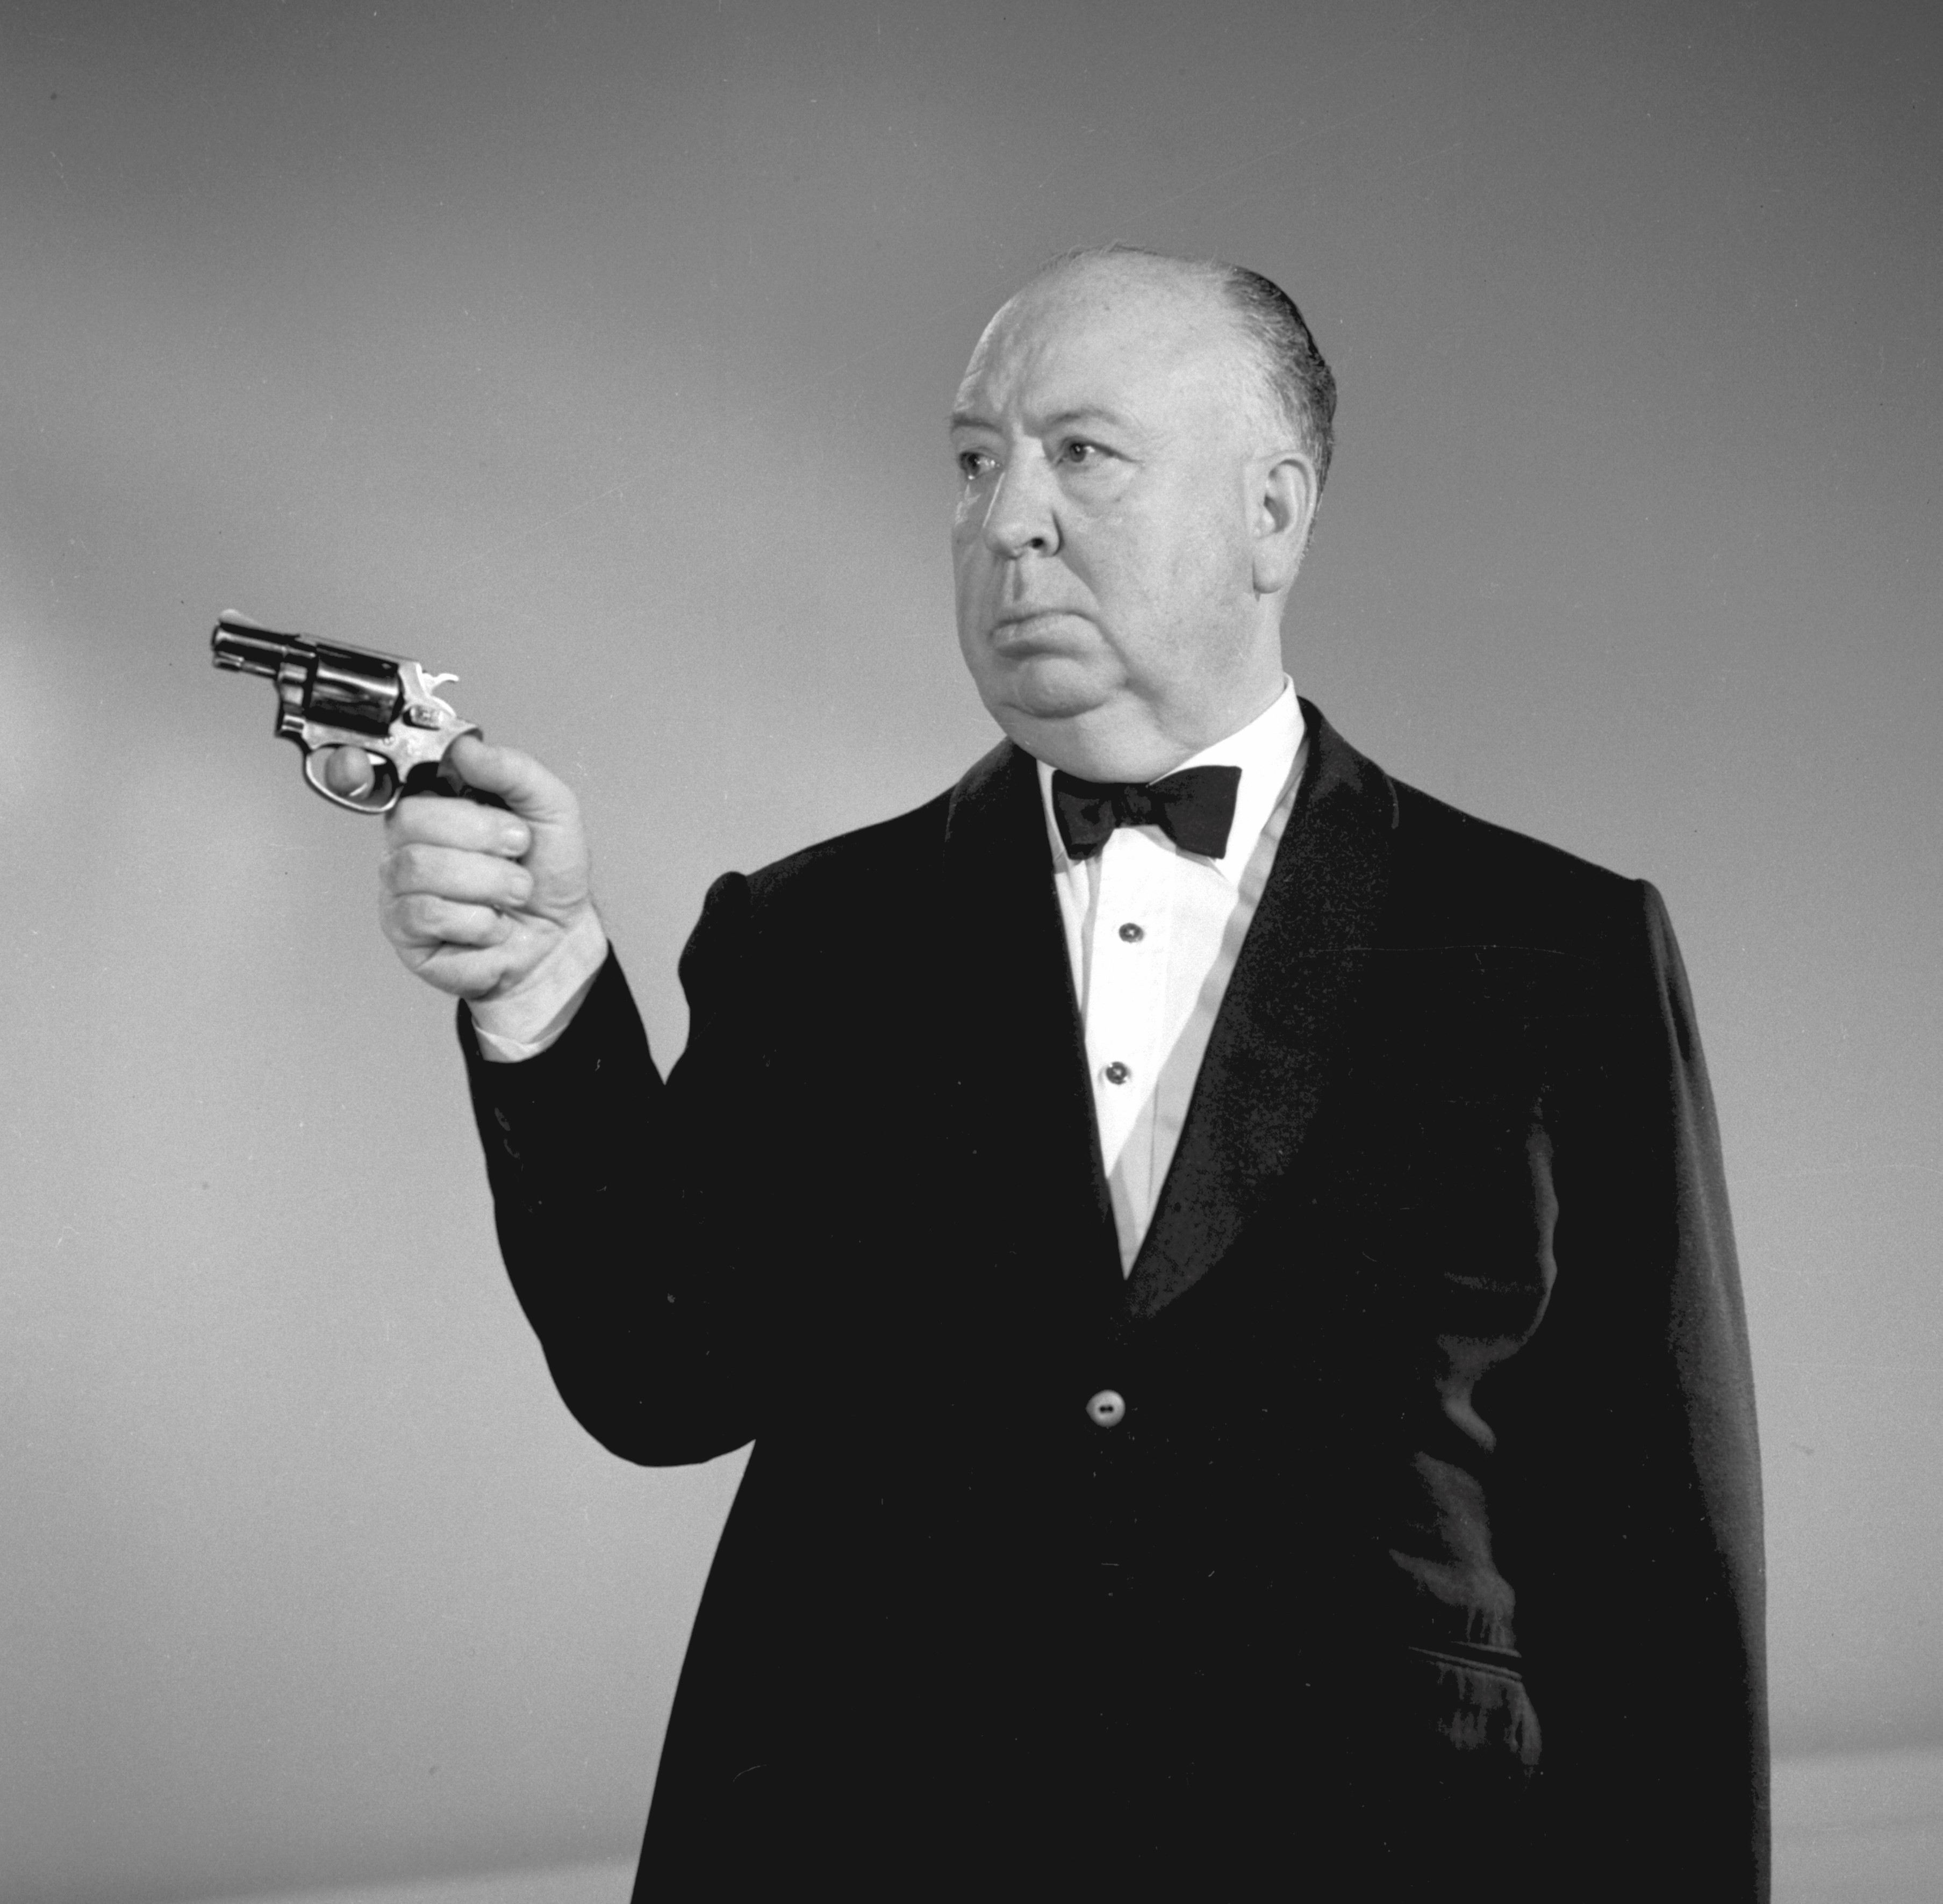 Alfred Hitchcock in a tuxedo holding a gun.